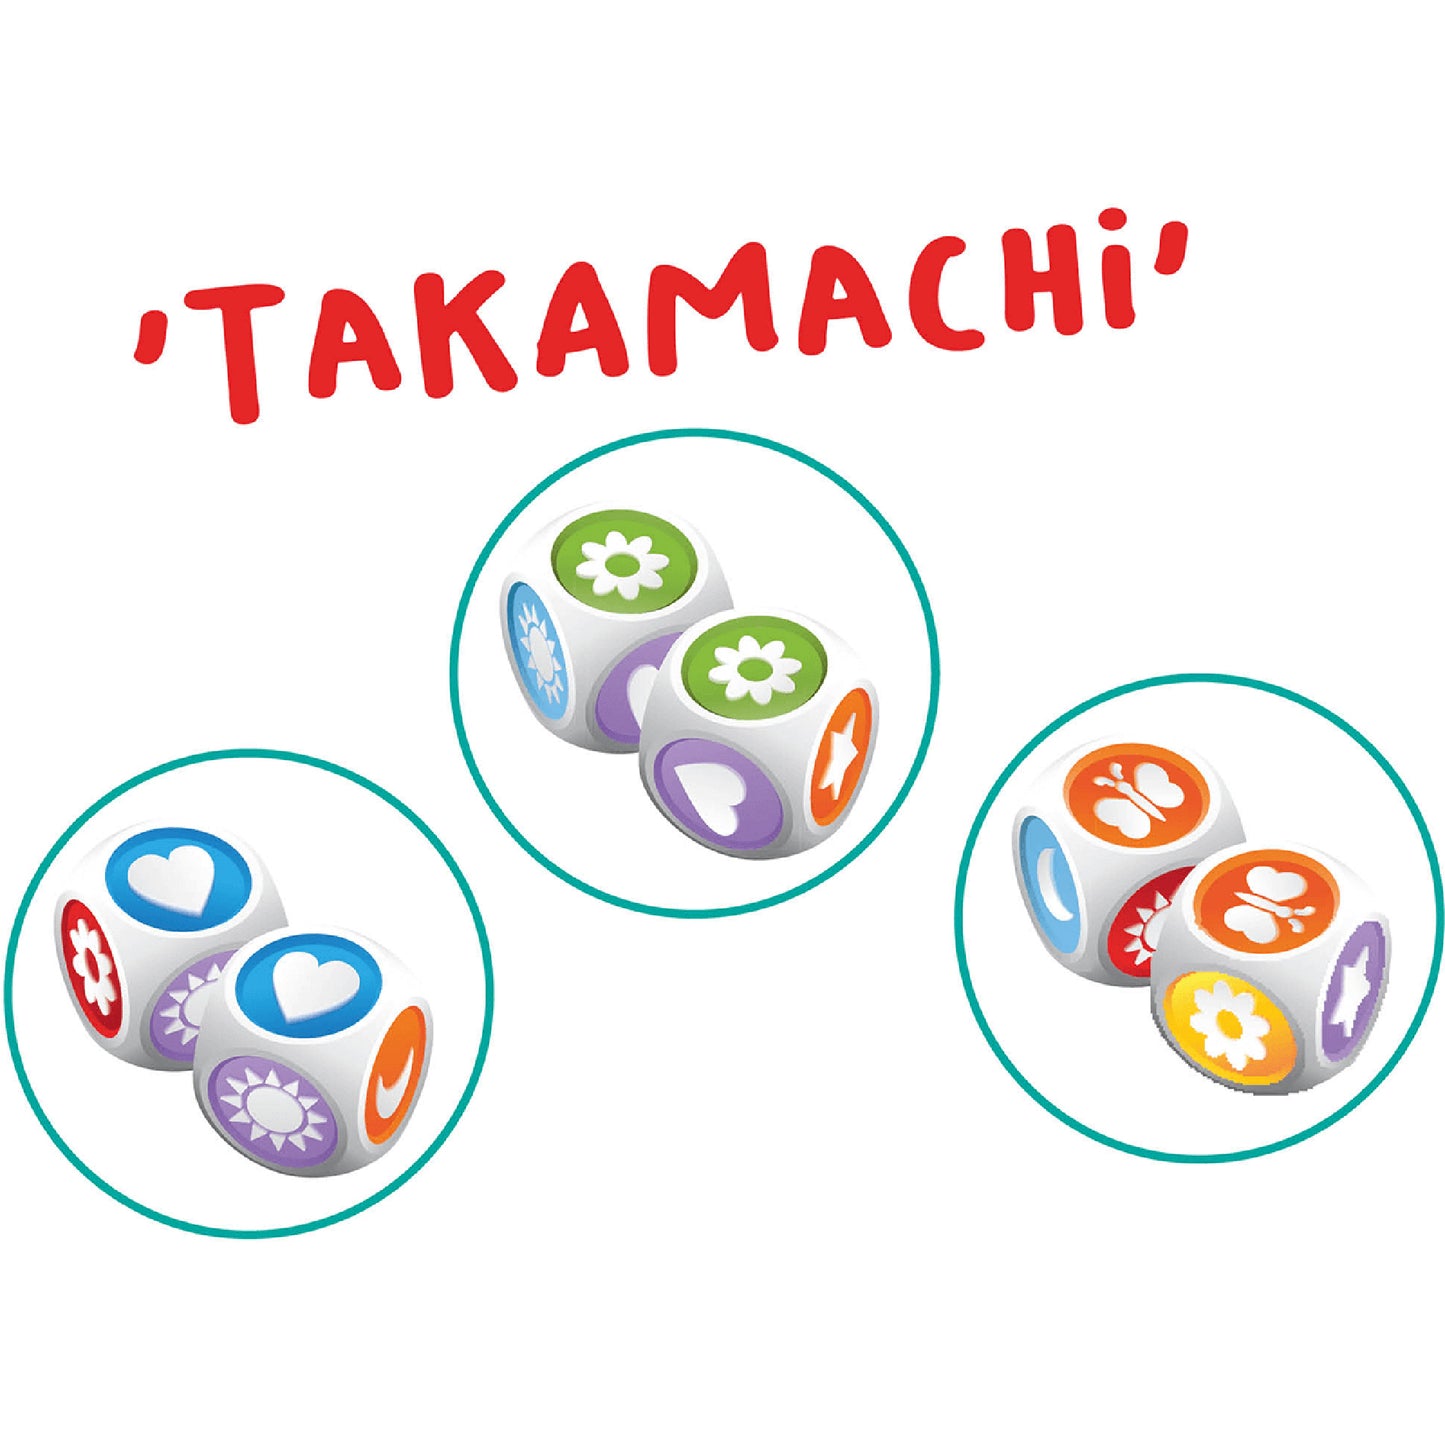 Photo of matching pair scenario in Takamachi game by FLEXIQ.